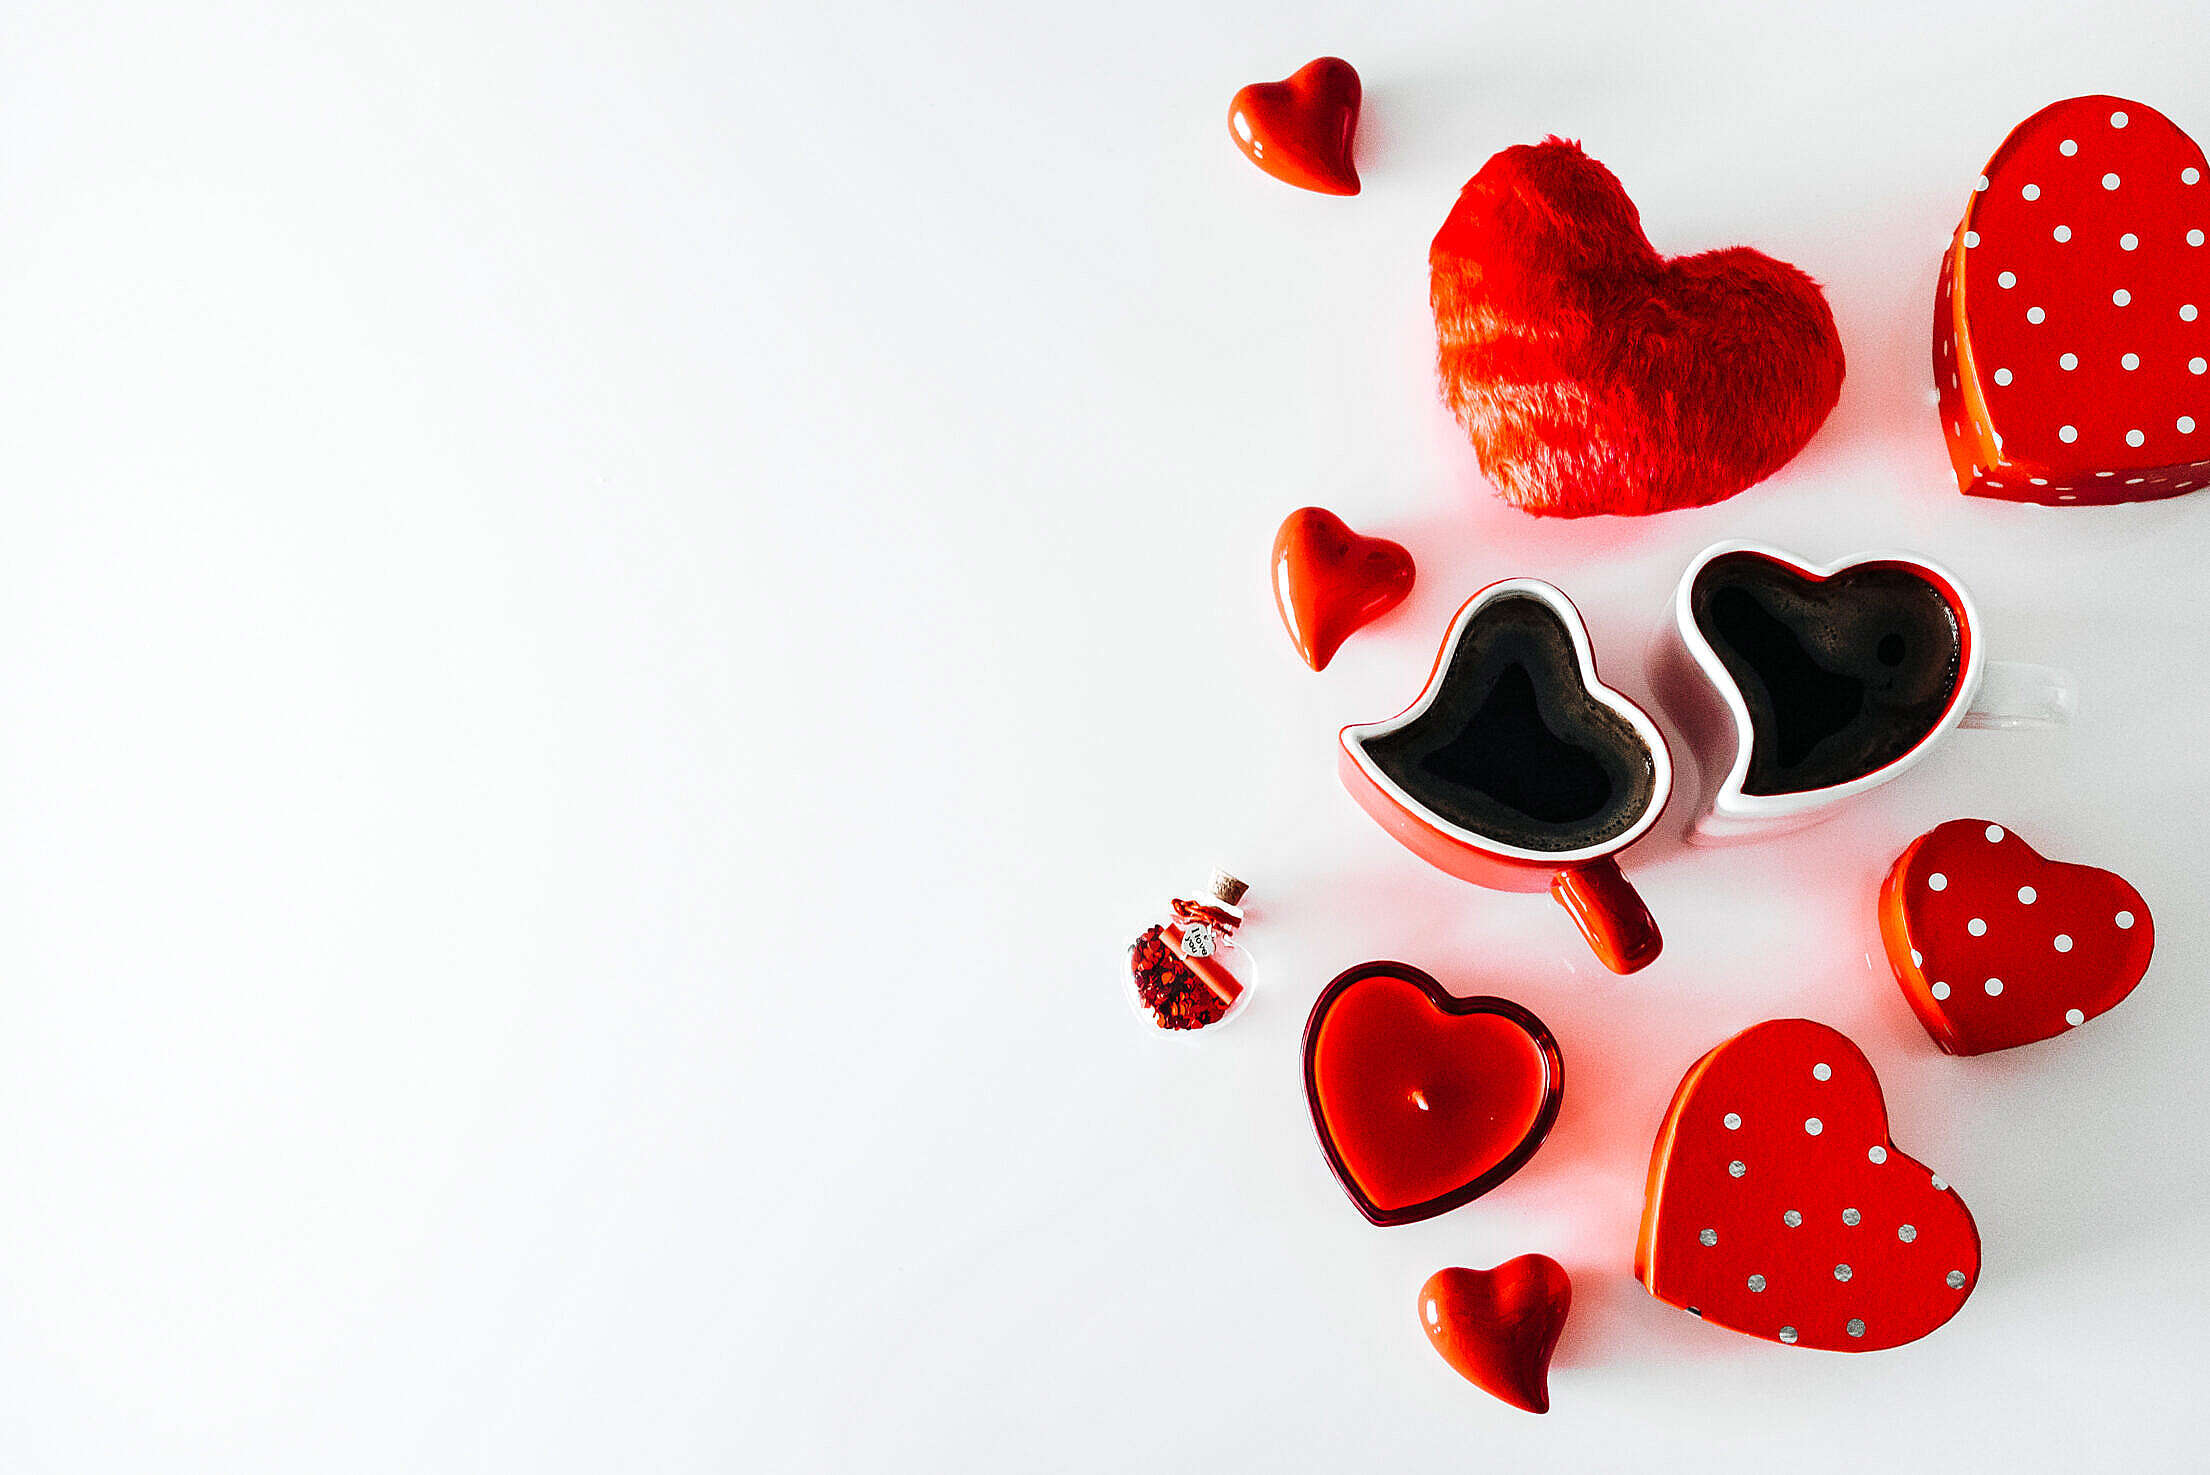 Romantic Heart-Shaped Objects Free Stock Photo